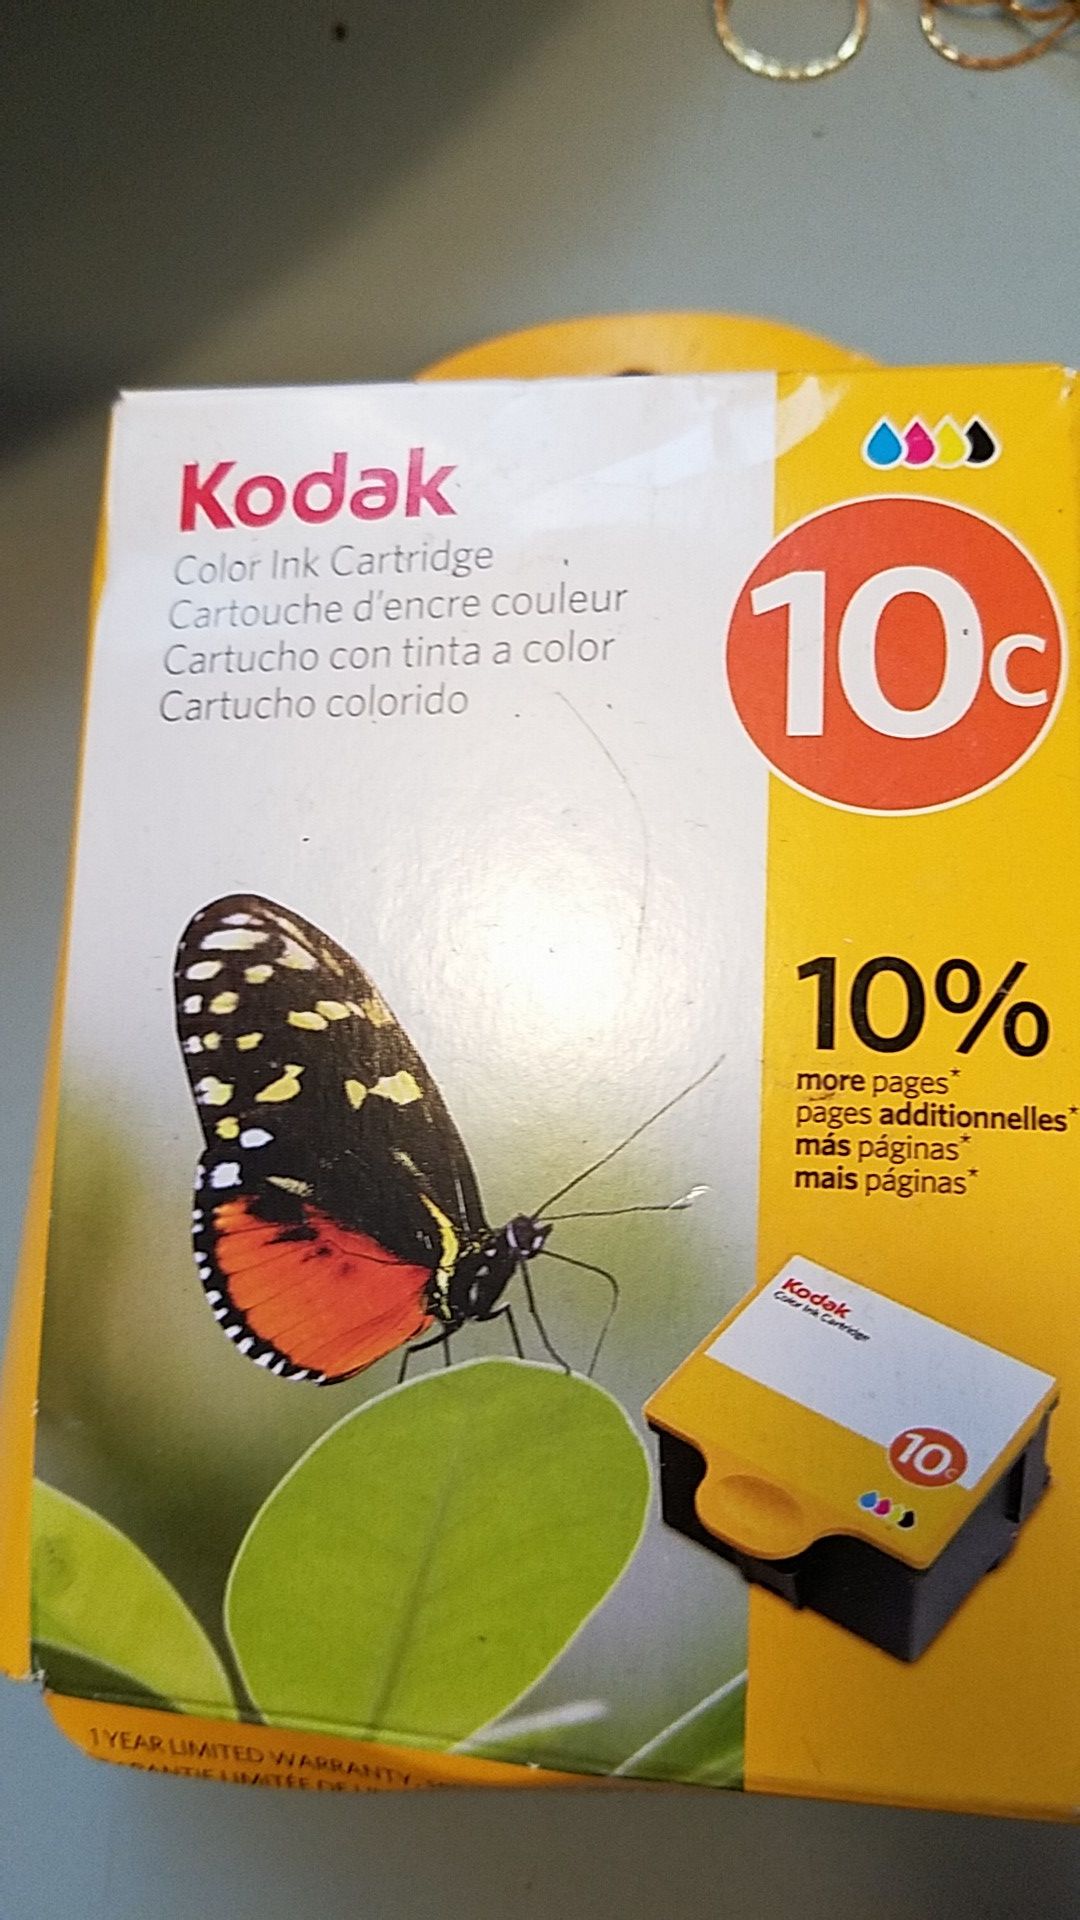 Kodak 10c color ink cartridge